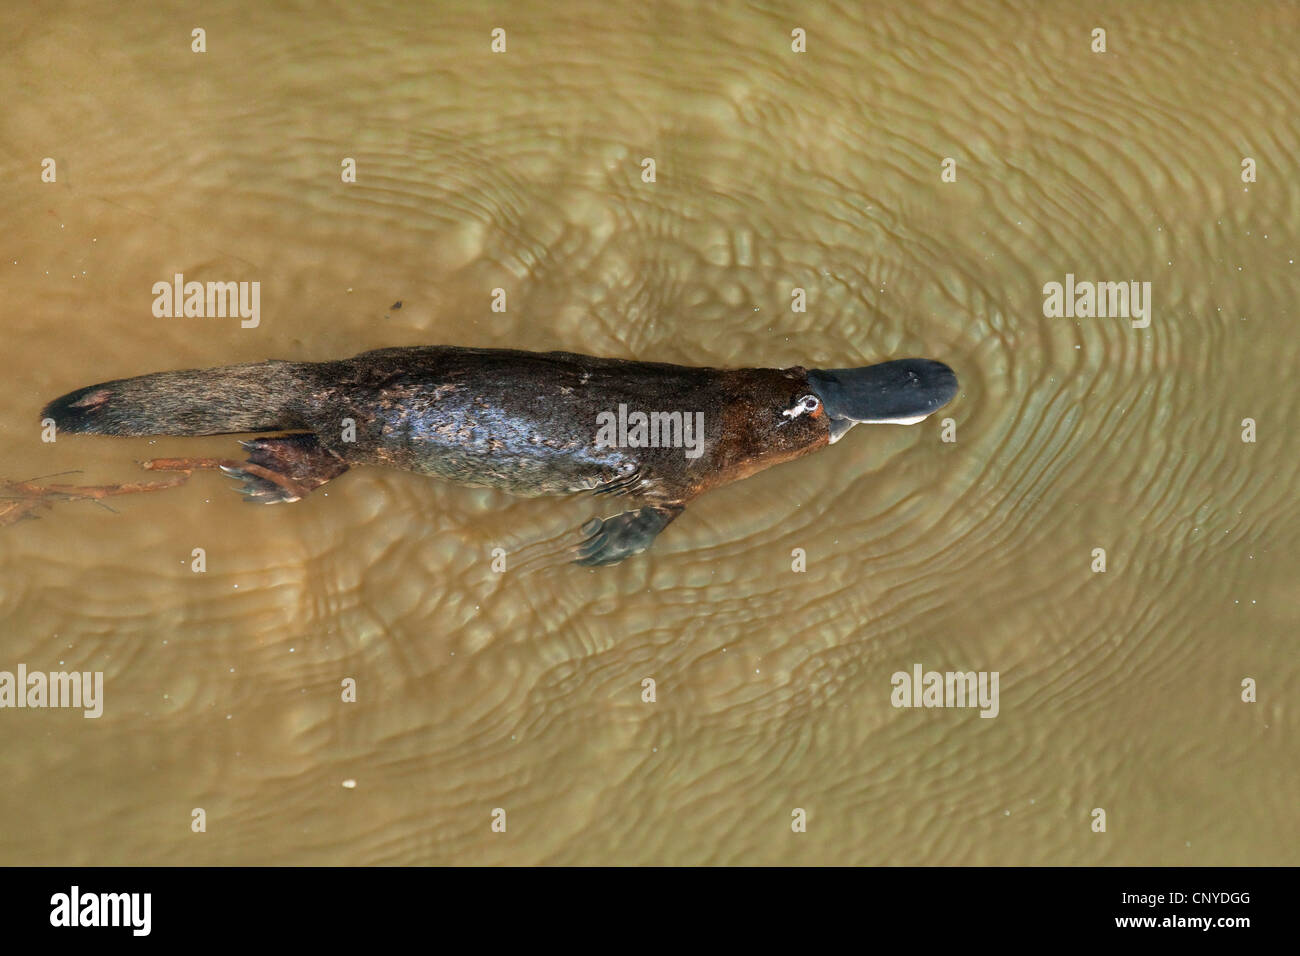 platypus, duck-billed platypus (Ornithorhynchus anatinus), swimming, Australia, Queensland, Atherton Tablelands Stock Photo